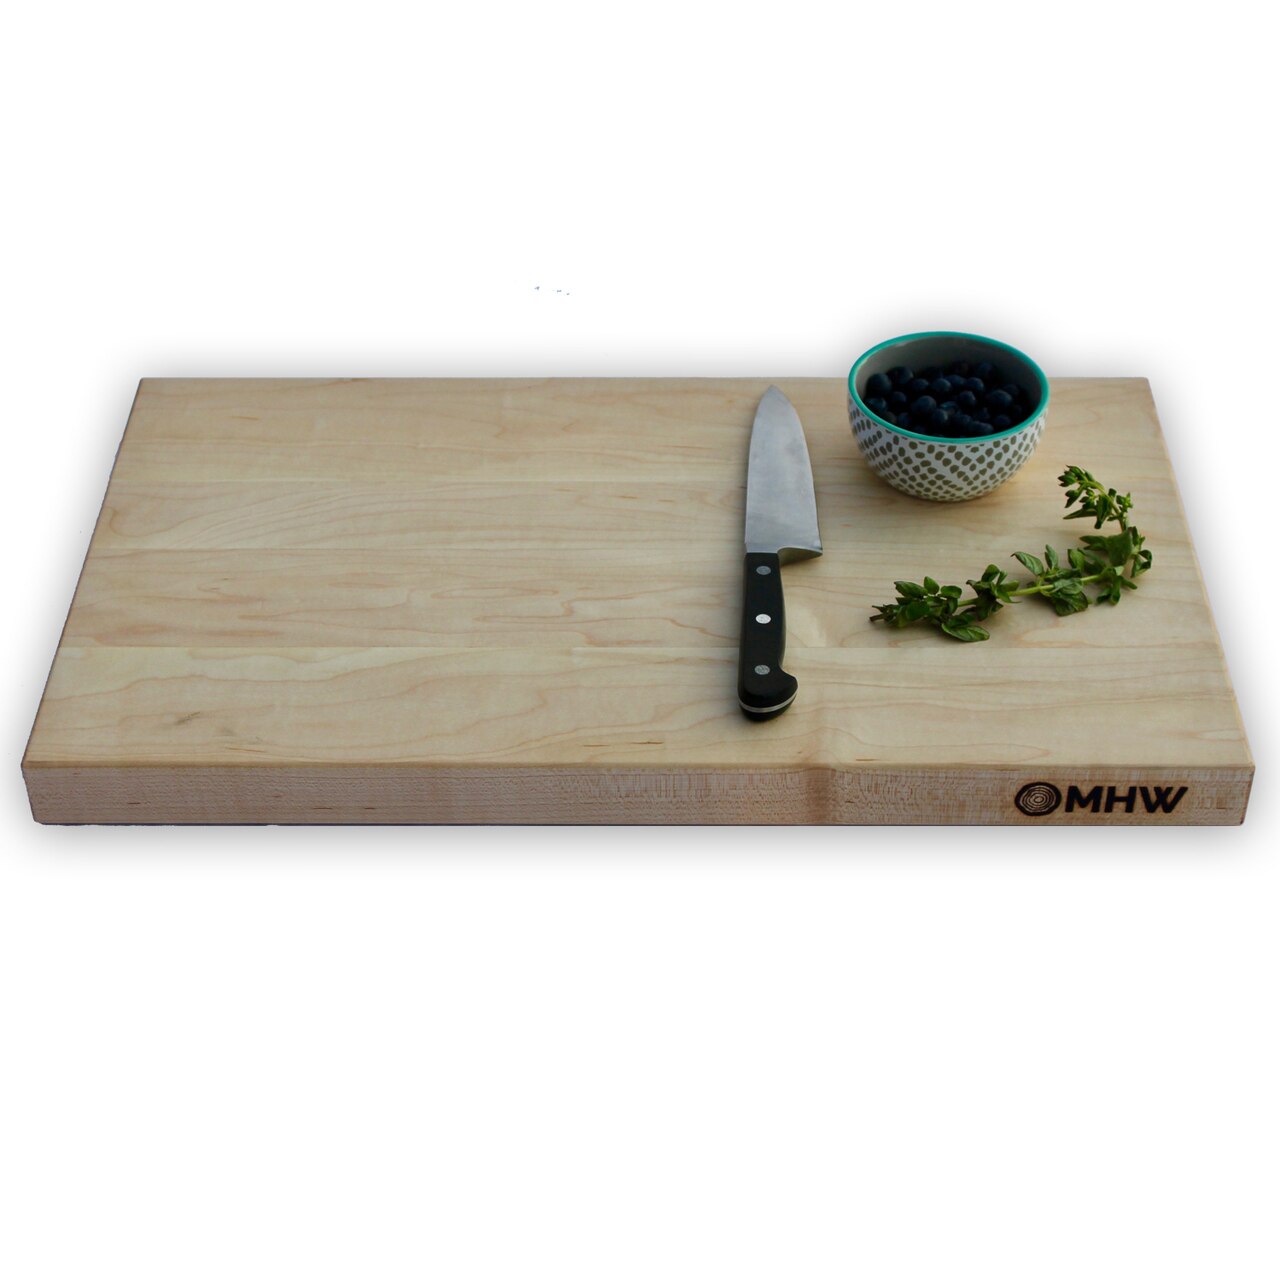 https://www.woodcuttingboardstore.com/wp-content/uploads/2020/06/14x20-Maple-Wood-Cutting-Board-wFREE-Board-Butter1.jpg